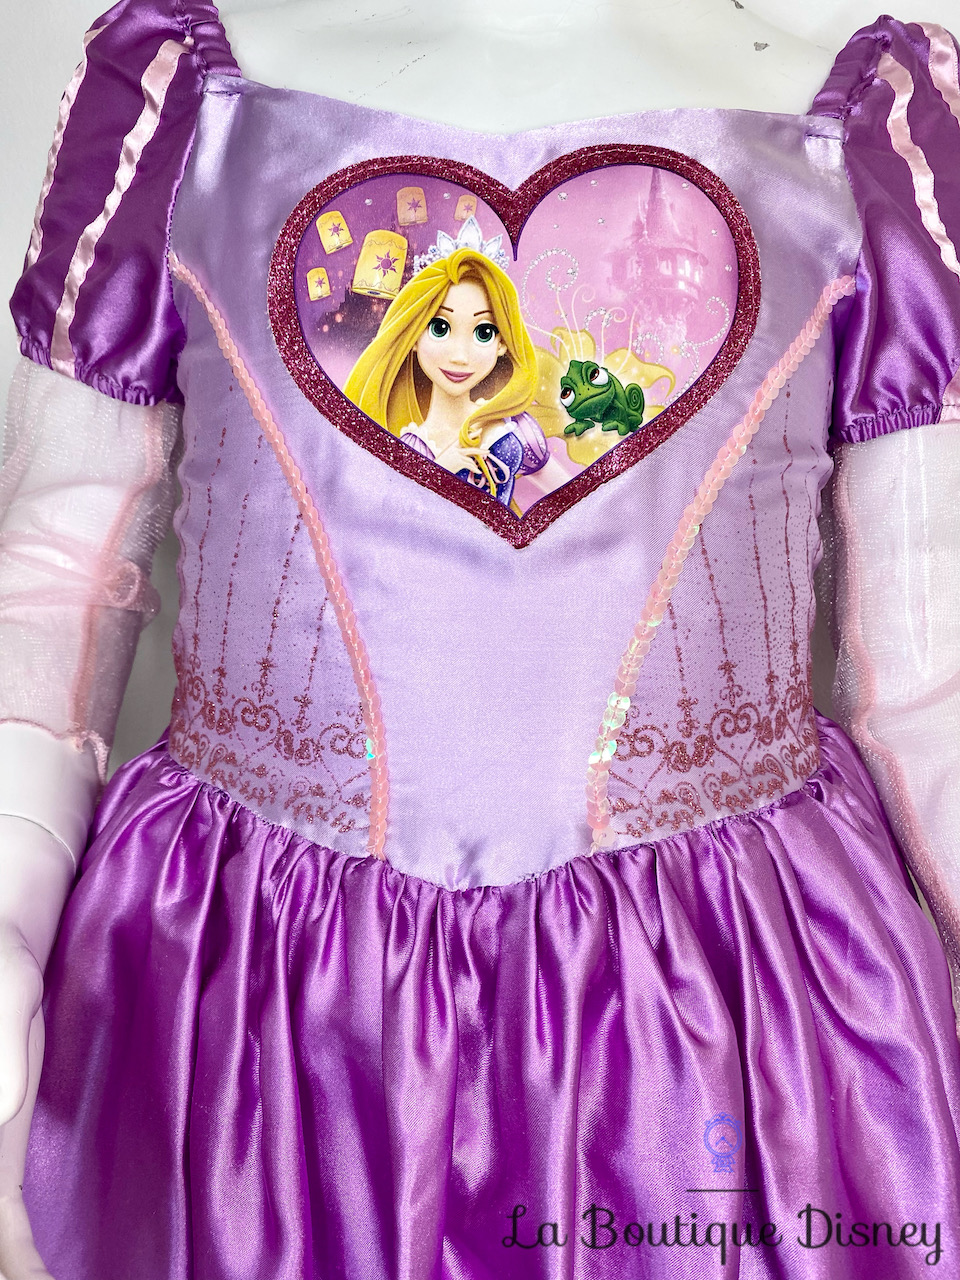 déguisement-raiponce-disney-rubies-taille-8-ans-robe-princesse-violet-coeur-princesse-pascal-15